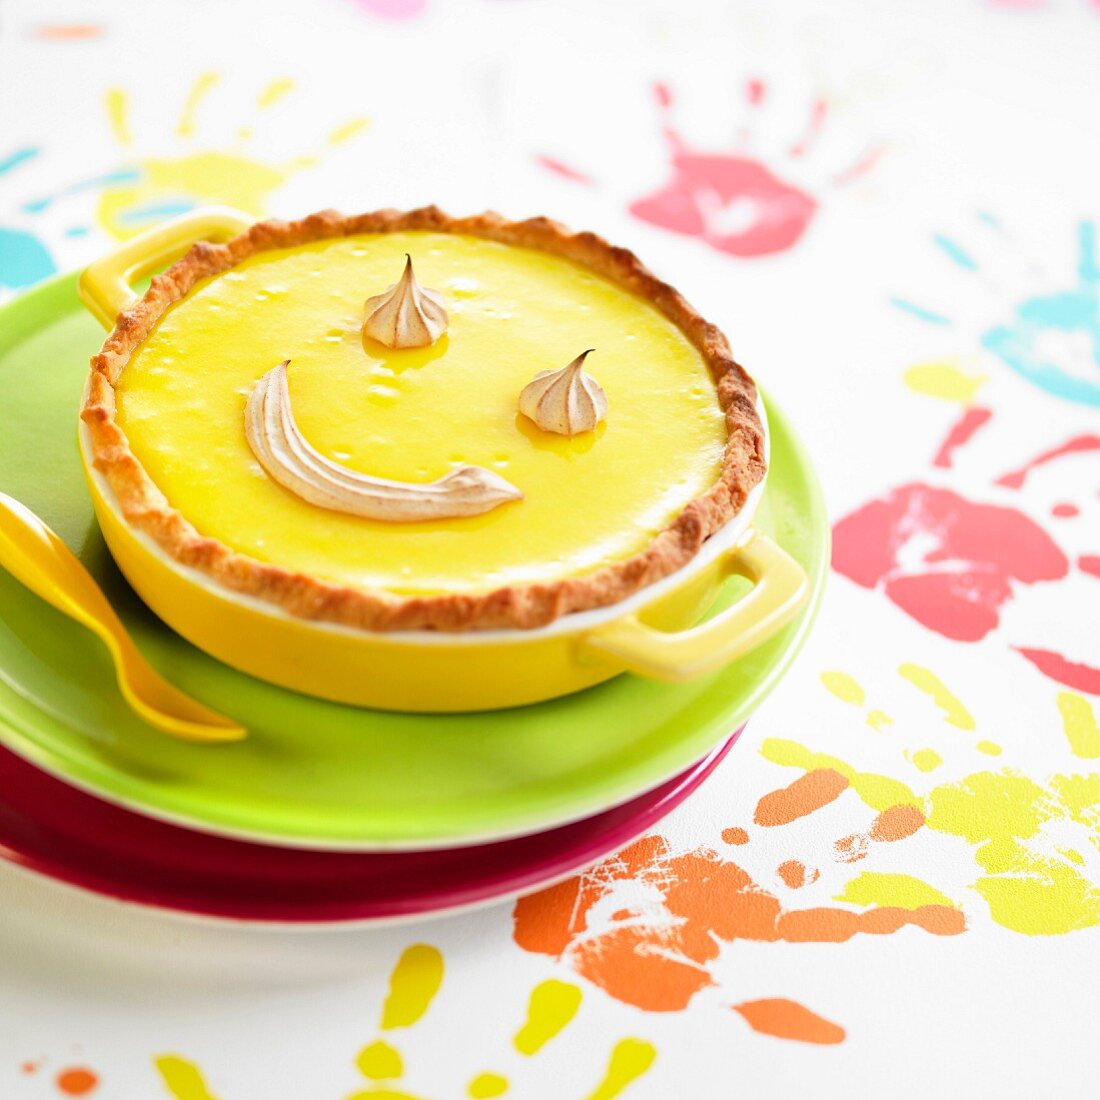 Lemon curd pie decorated with meringue smile